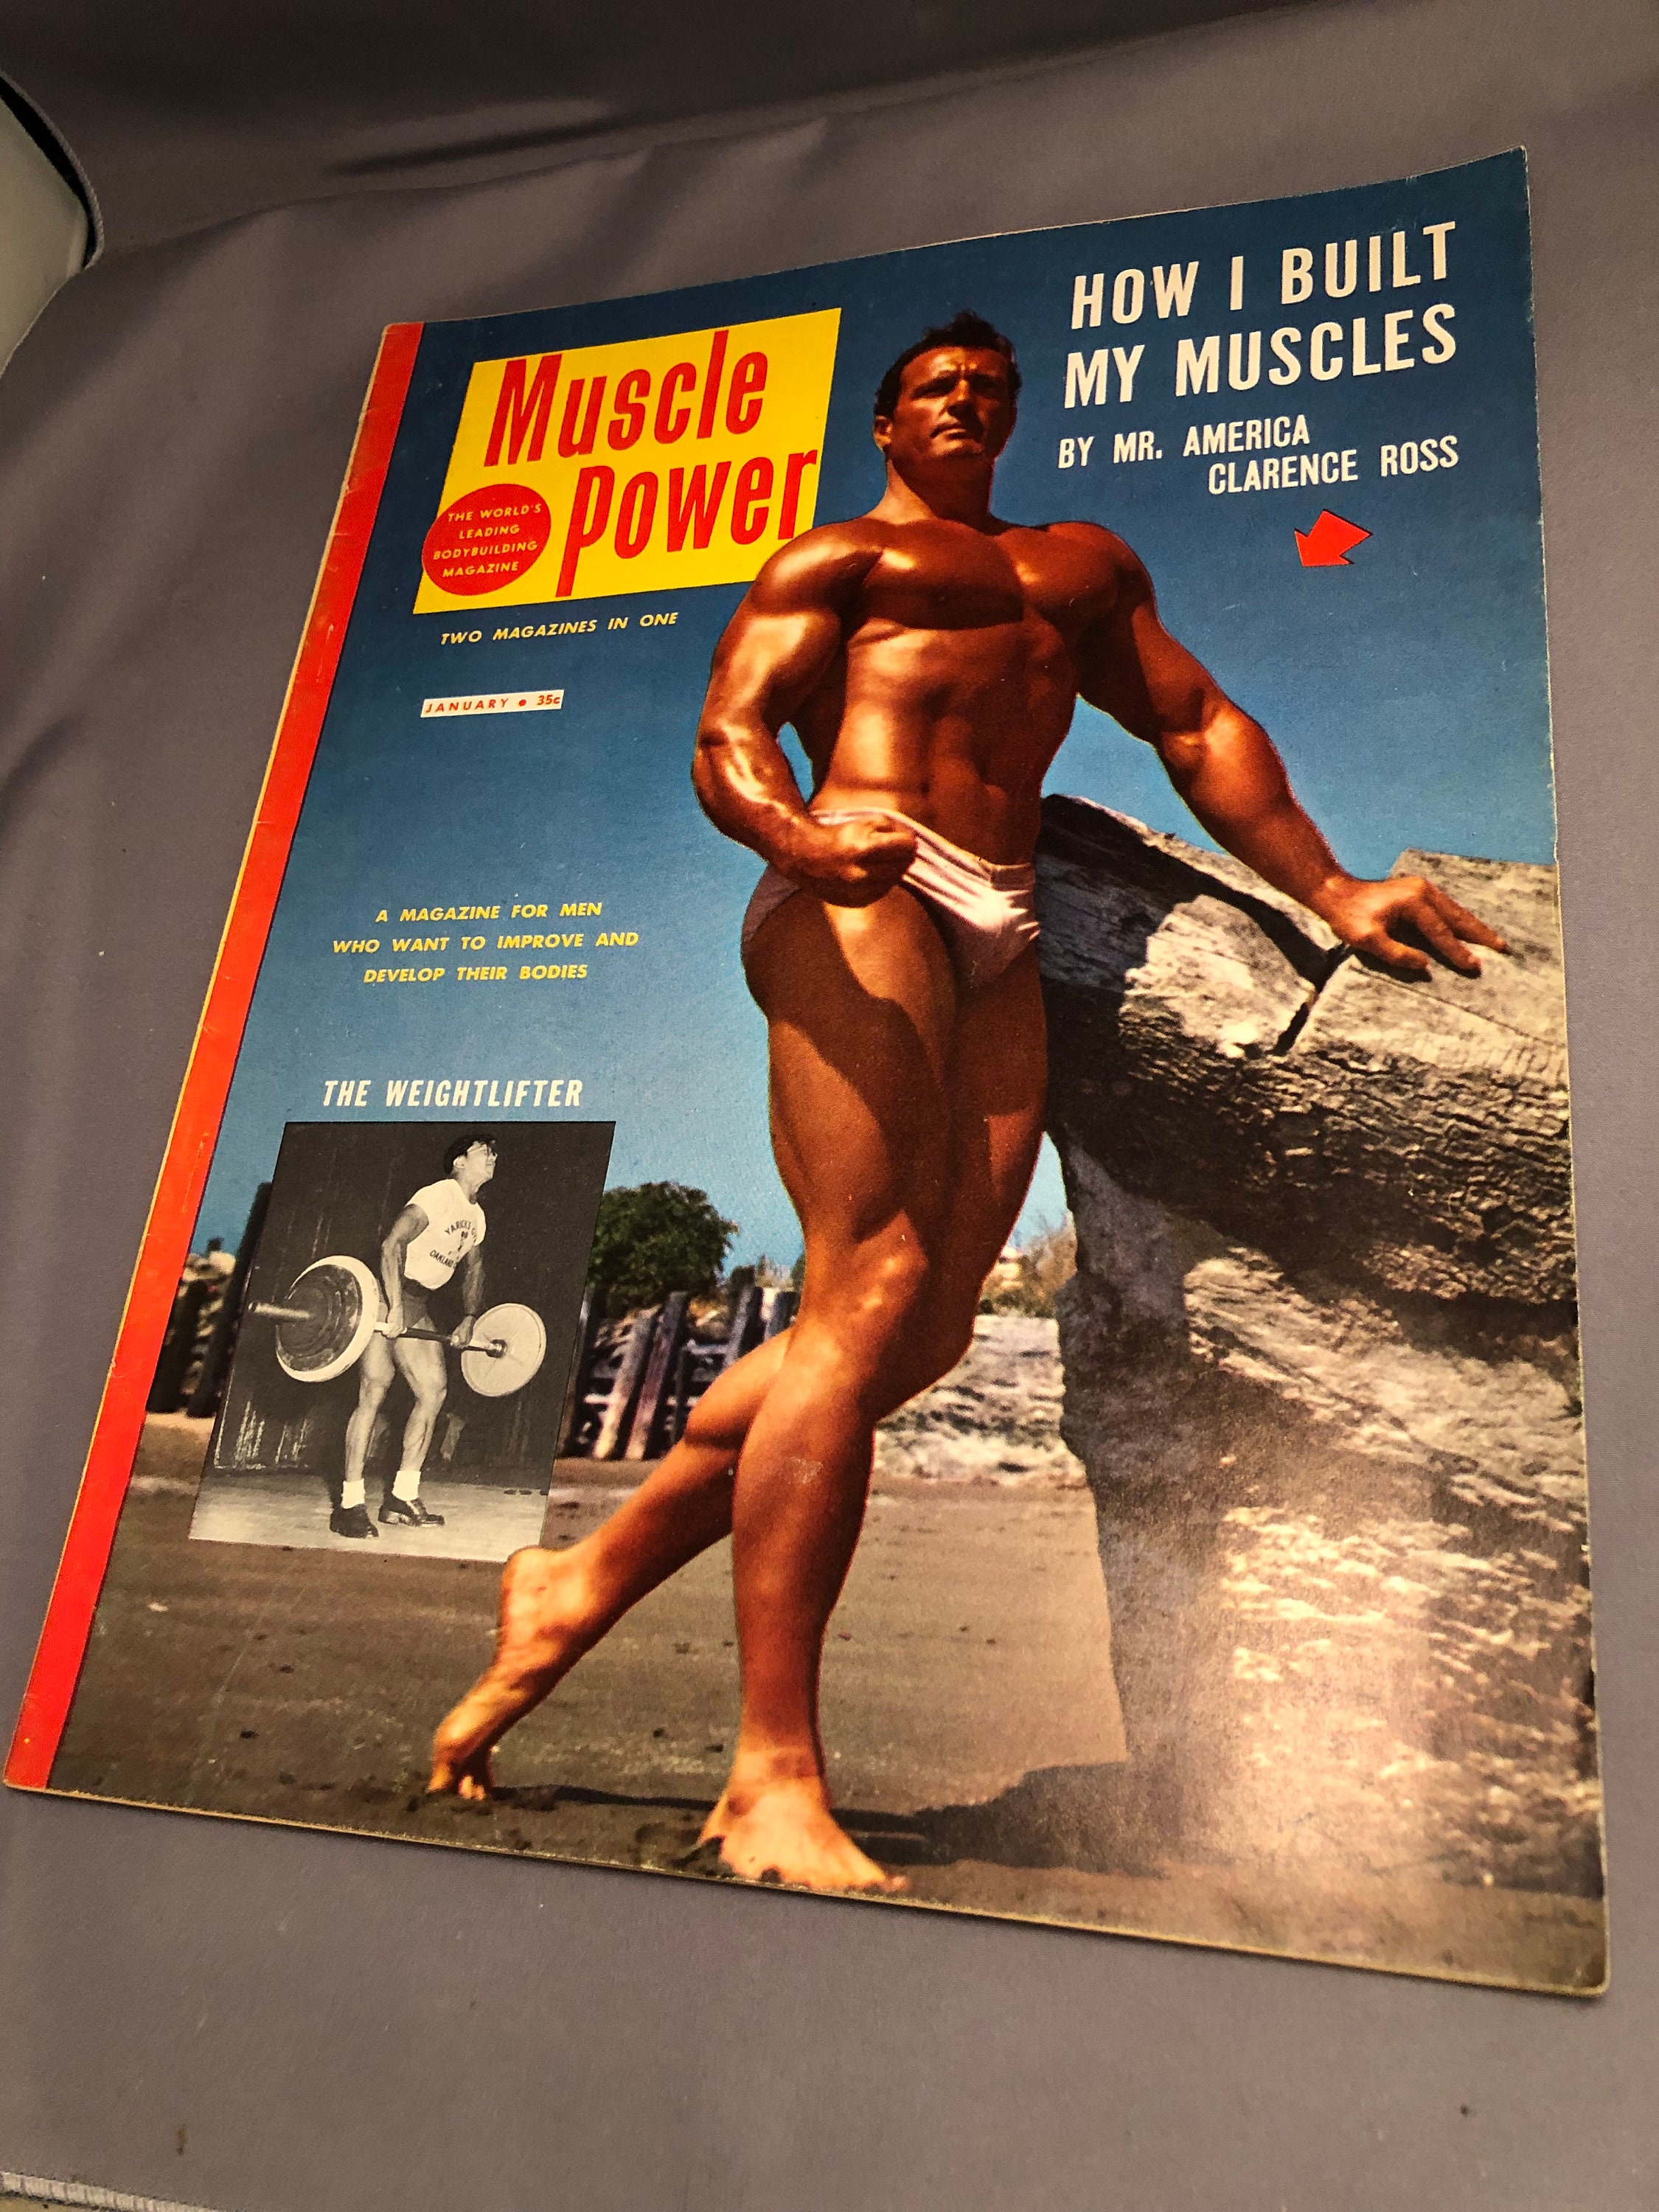 Beefcake Muscles image